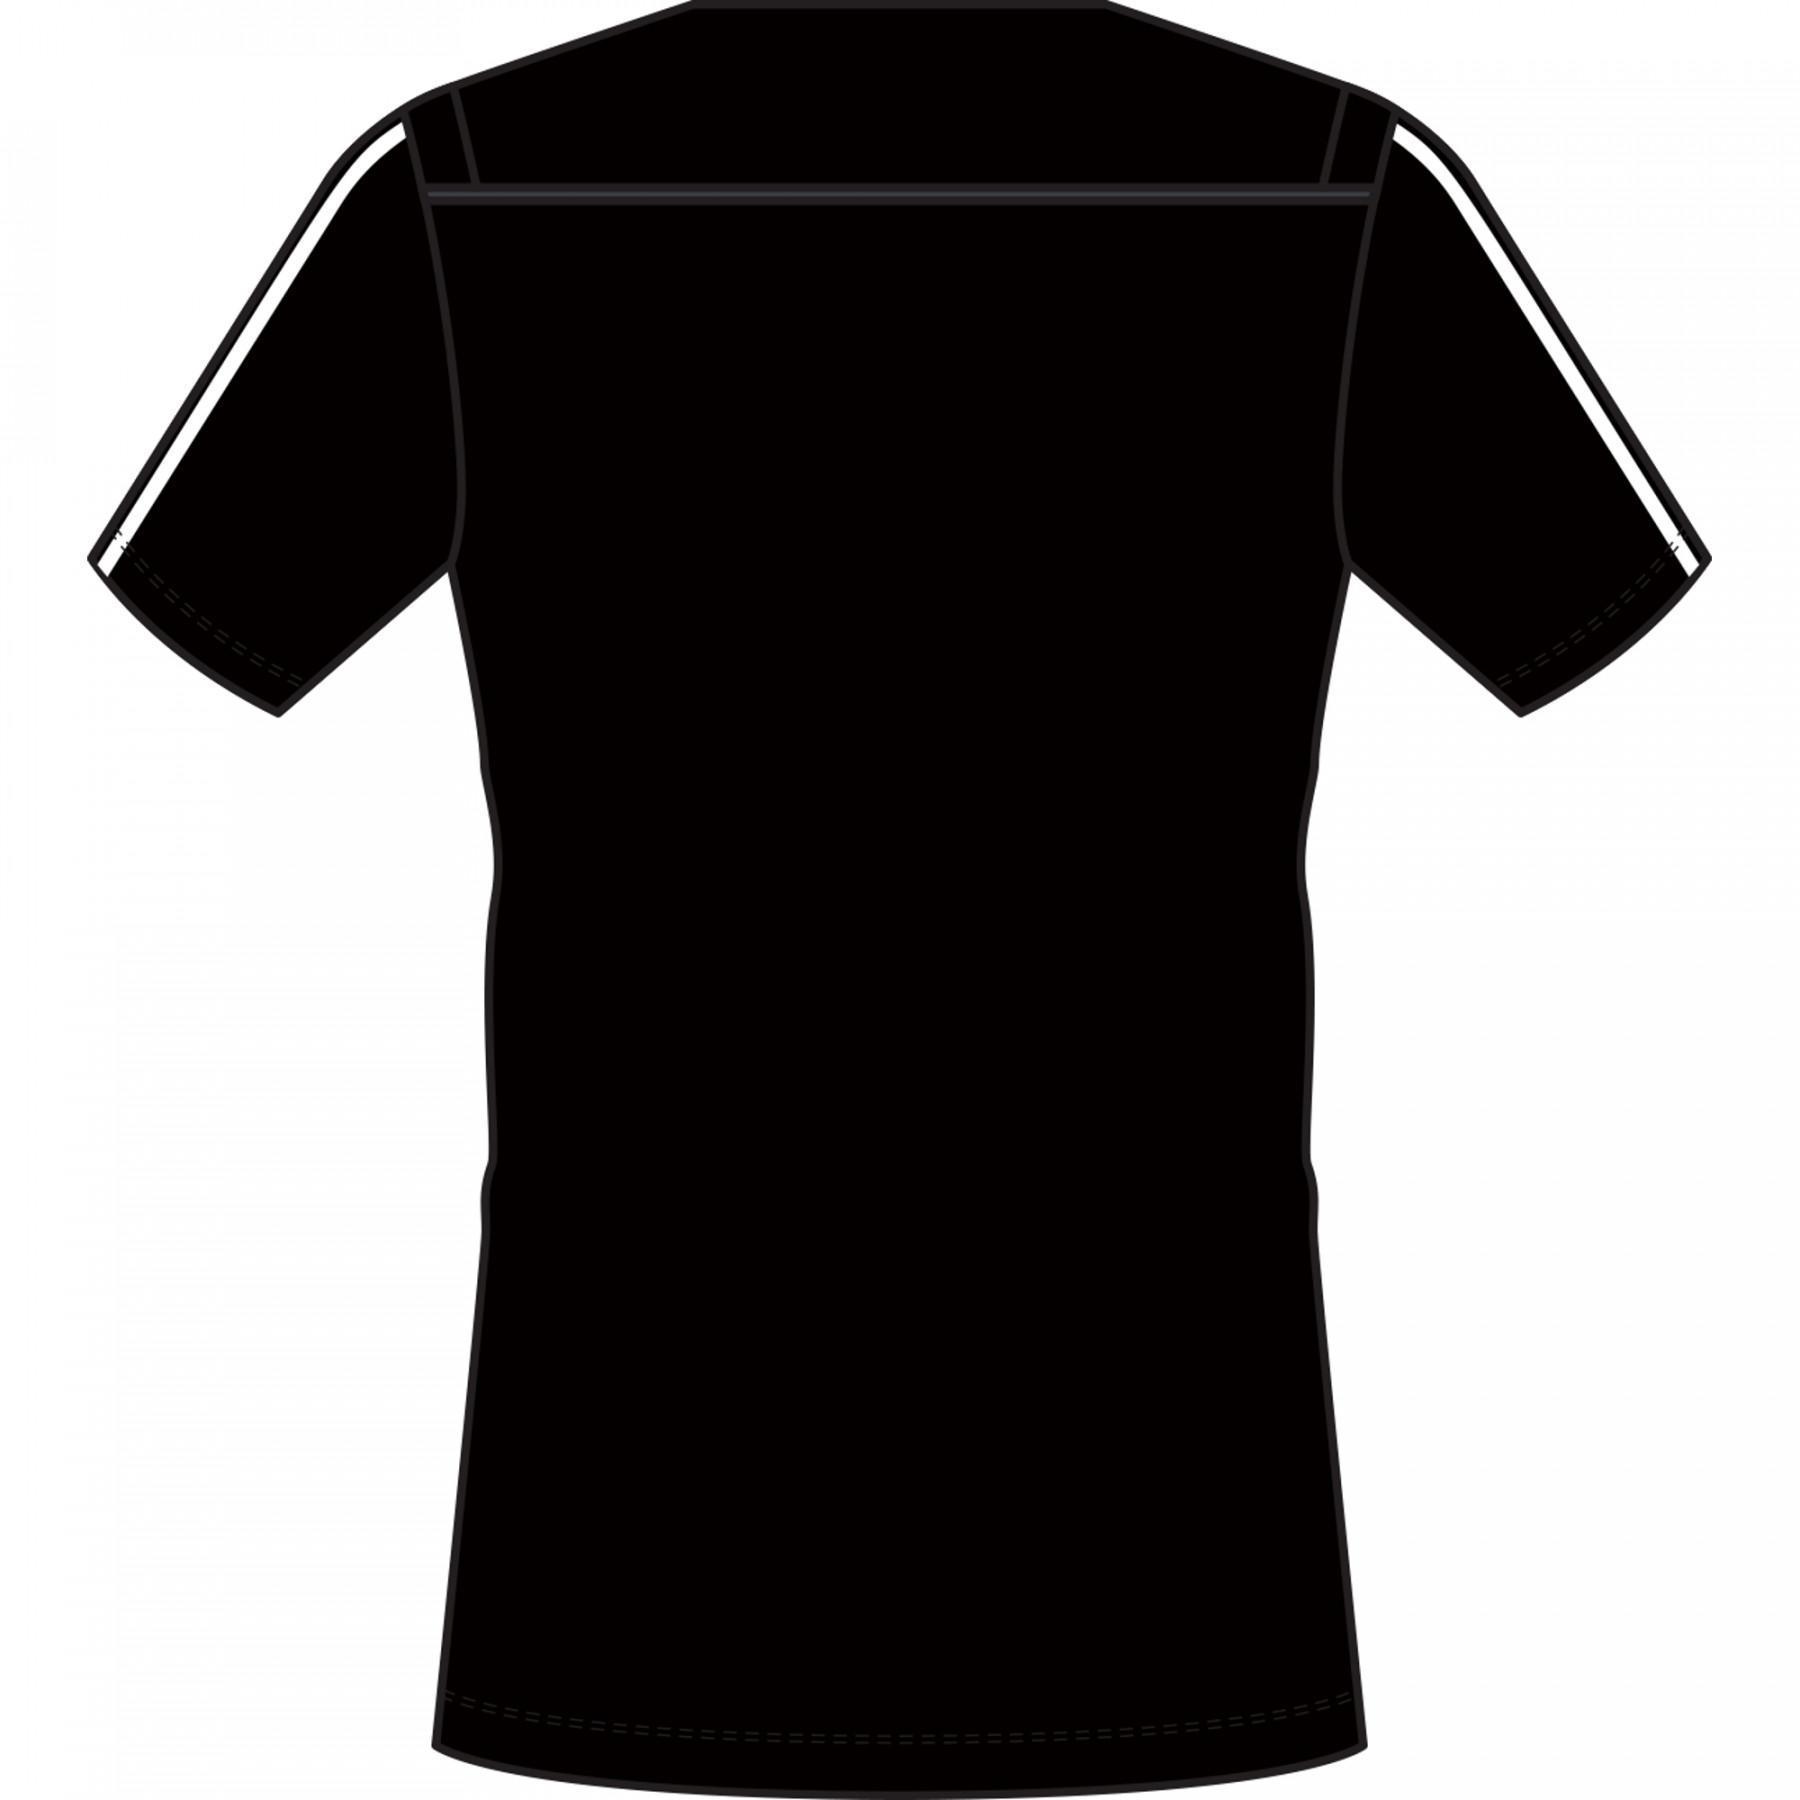 Children's T-shirt Juventus